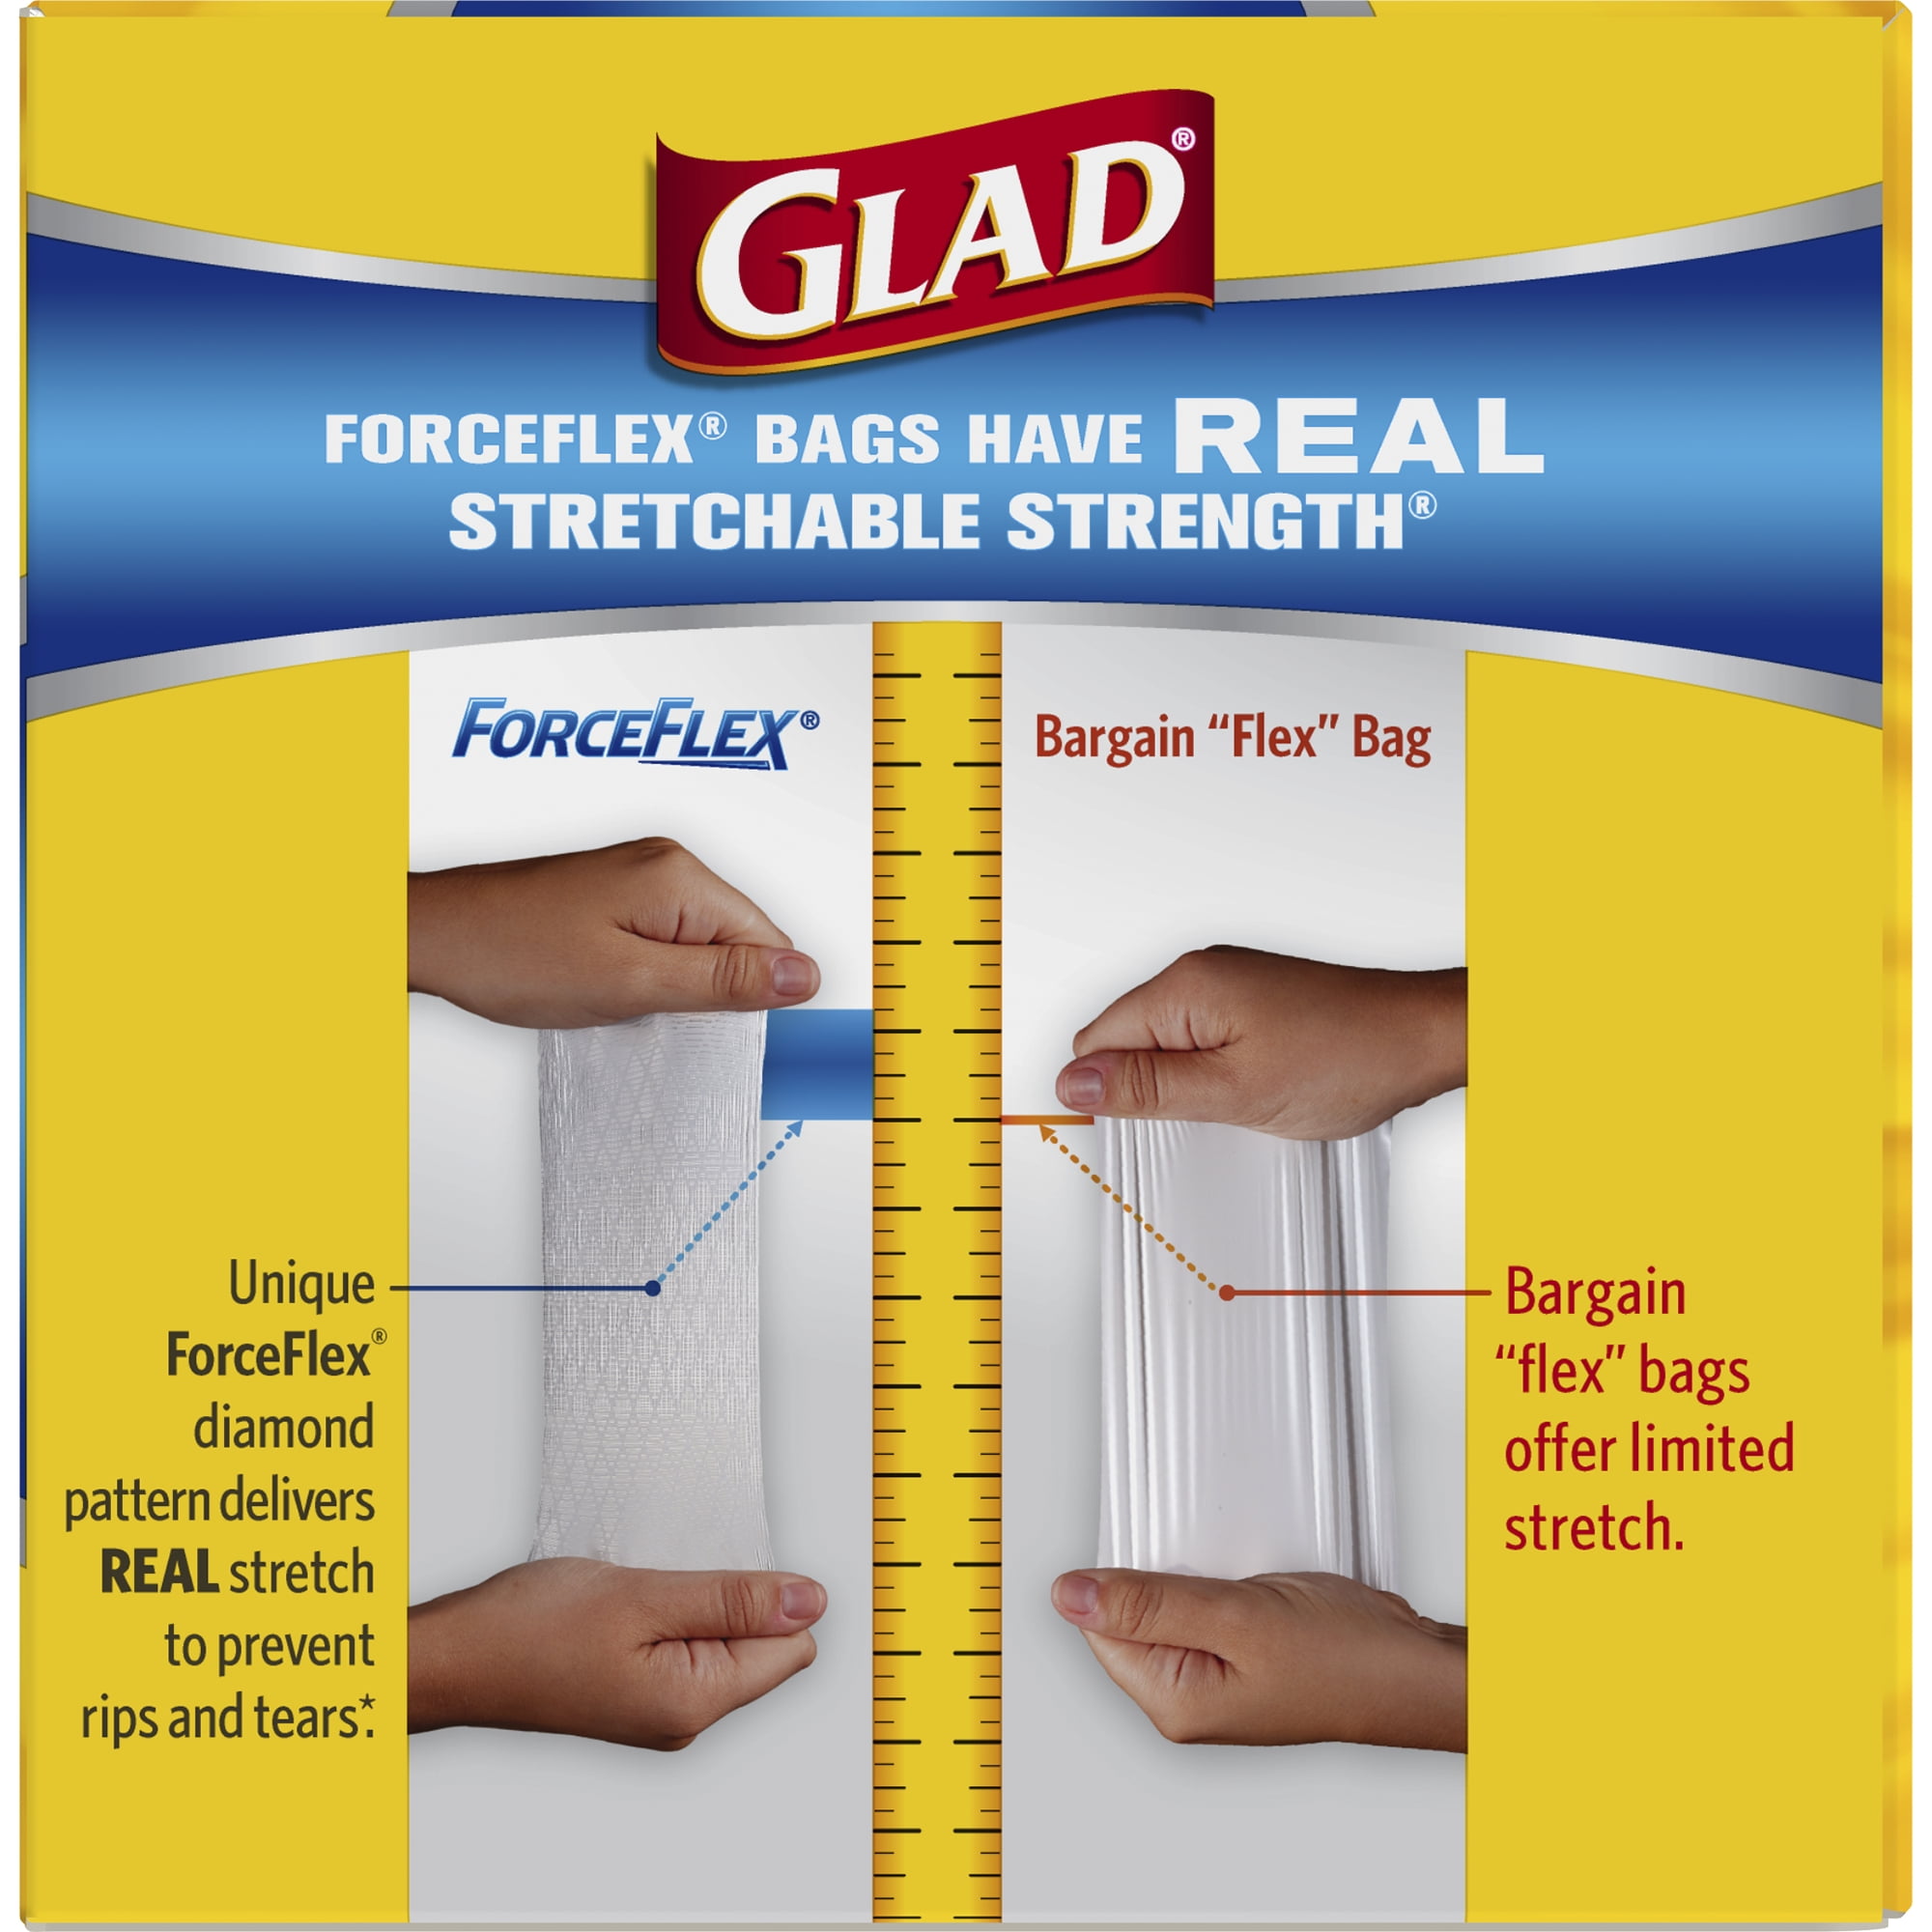 Glad ForceFlex Quick-Tie Medium Trash Bags (70403CT)